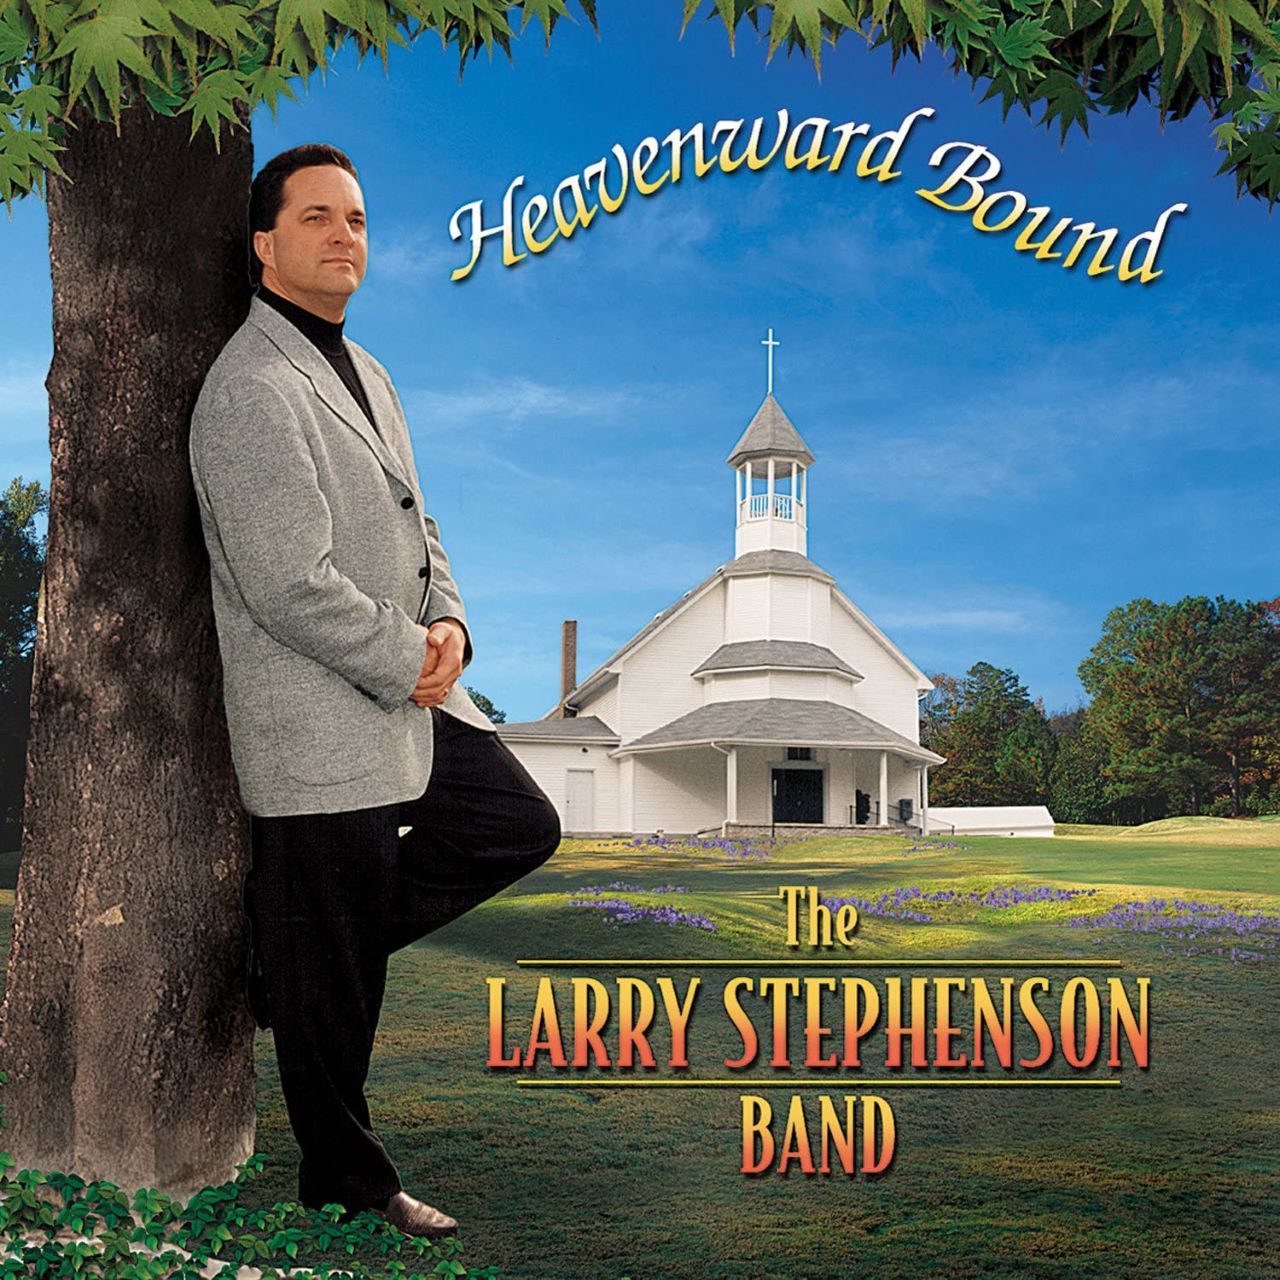 Larry Stephenson Band - Heavenward Bound cover album